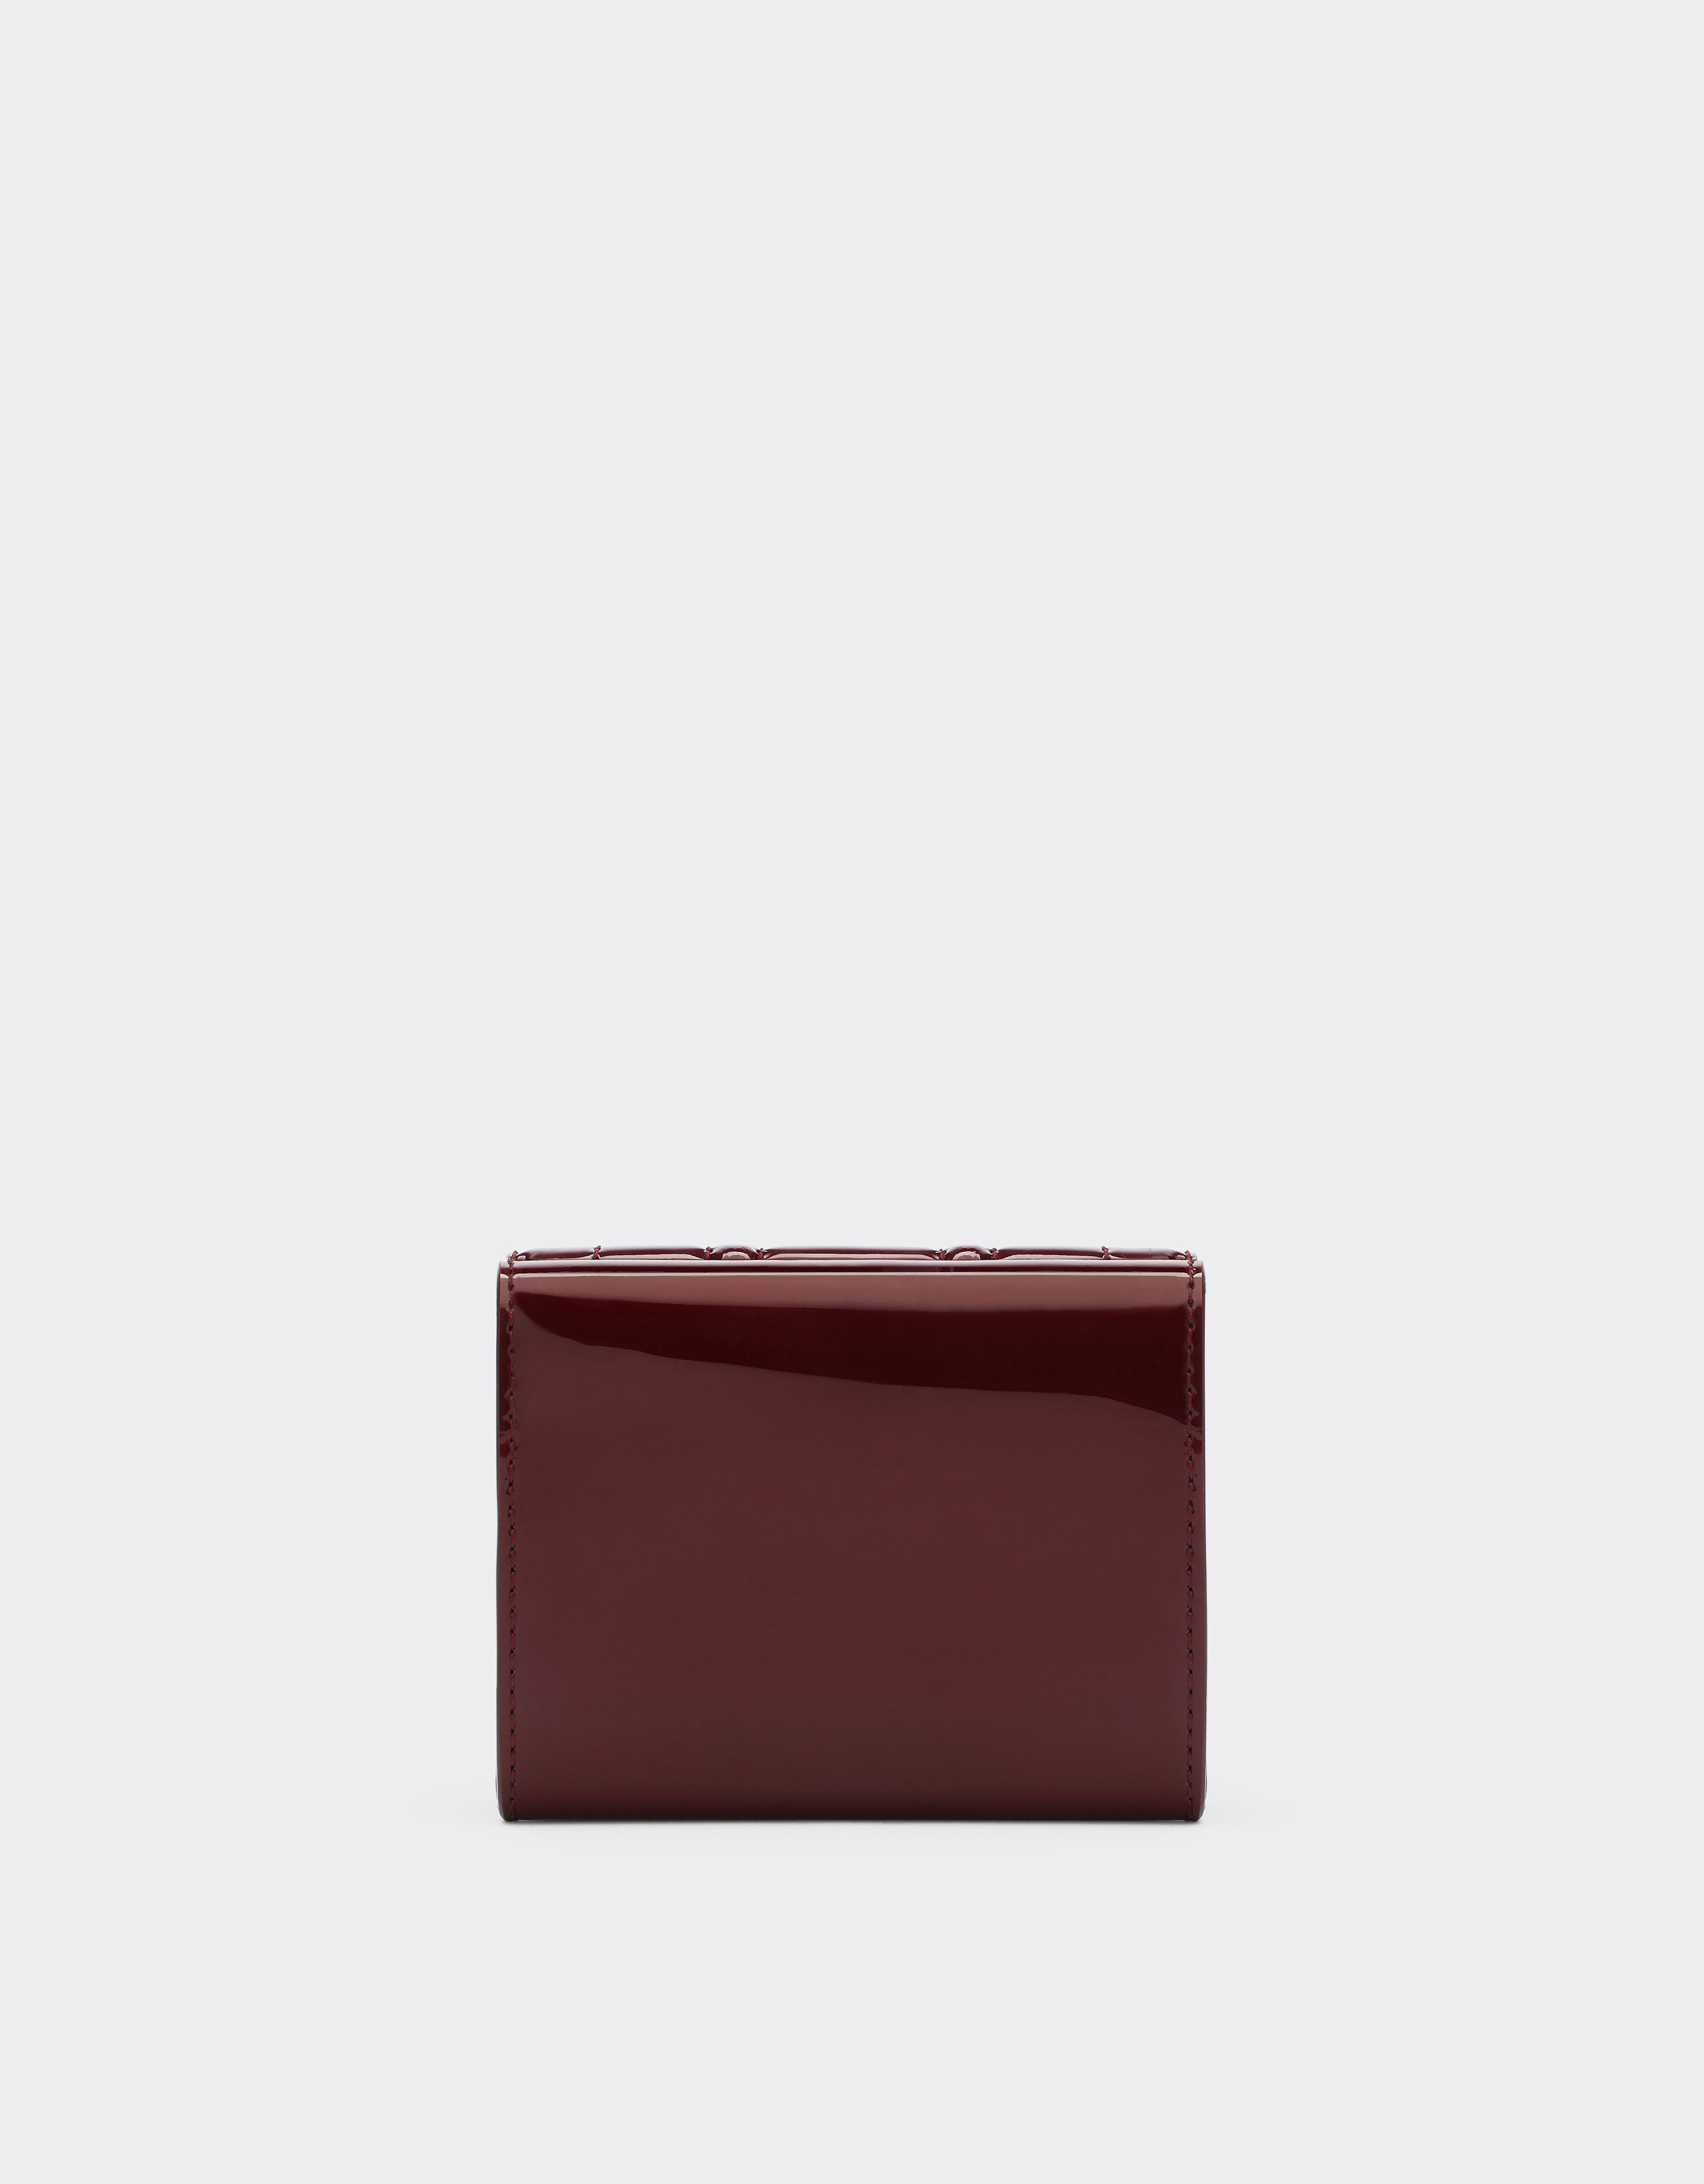 Ferrari Portemonnaie aus glänzendem Lackleder, dreifach faltbar Bordeaux 20426f